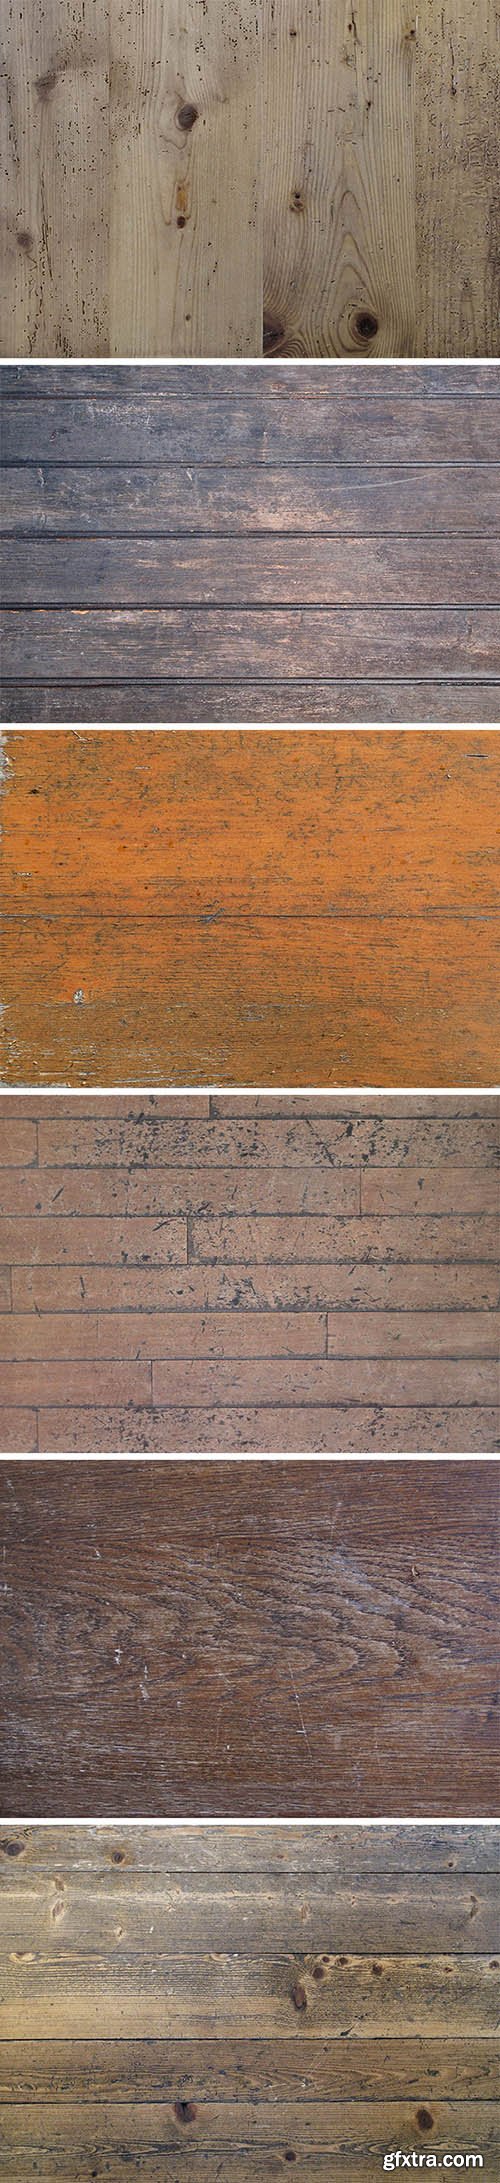 Textures - 6 Vintage Wood Backgrounds Vol.2